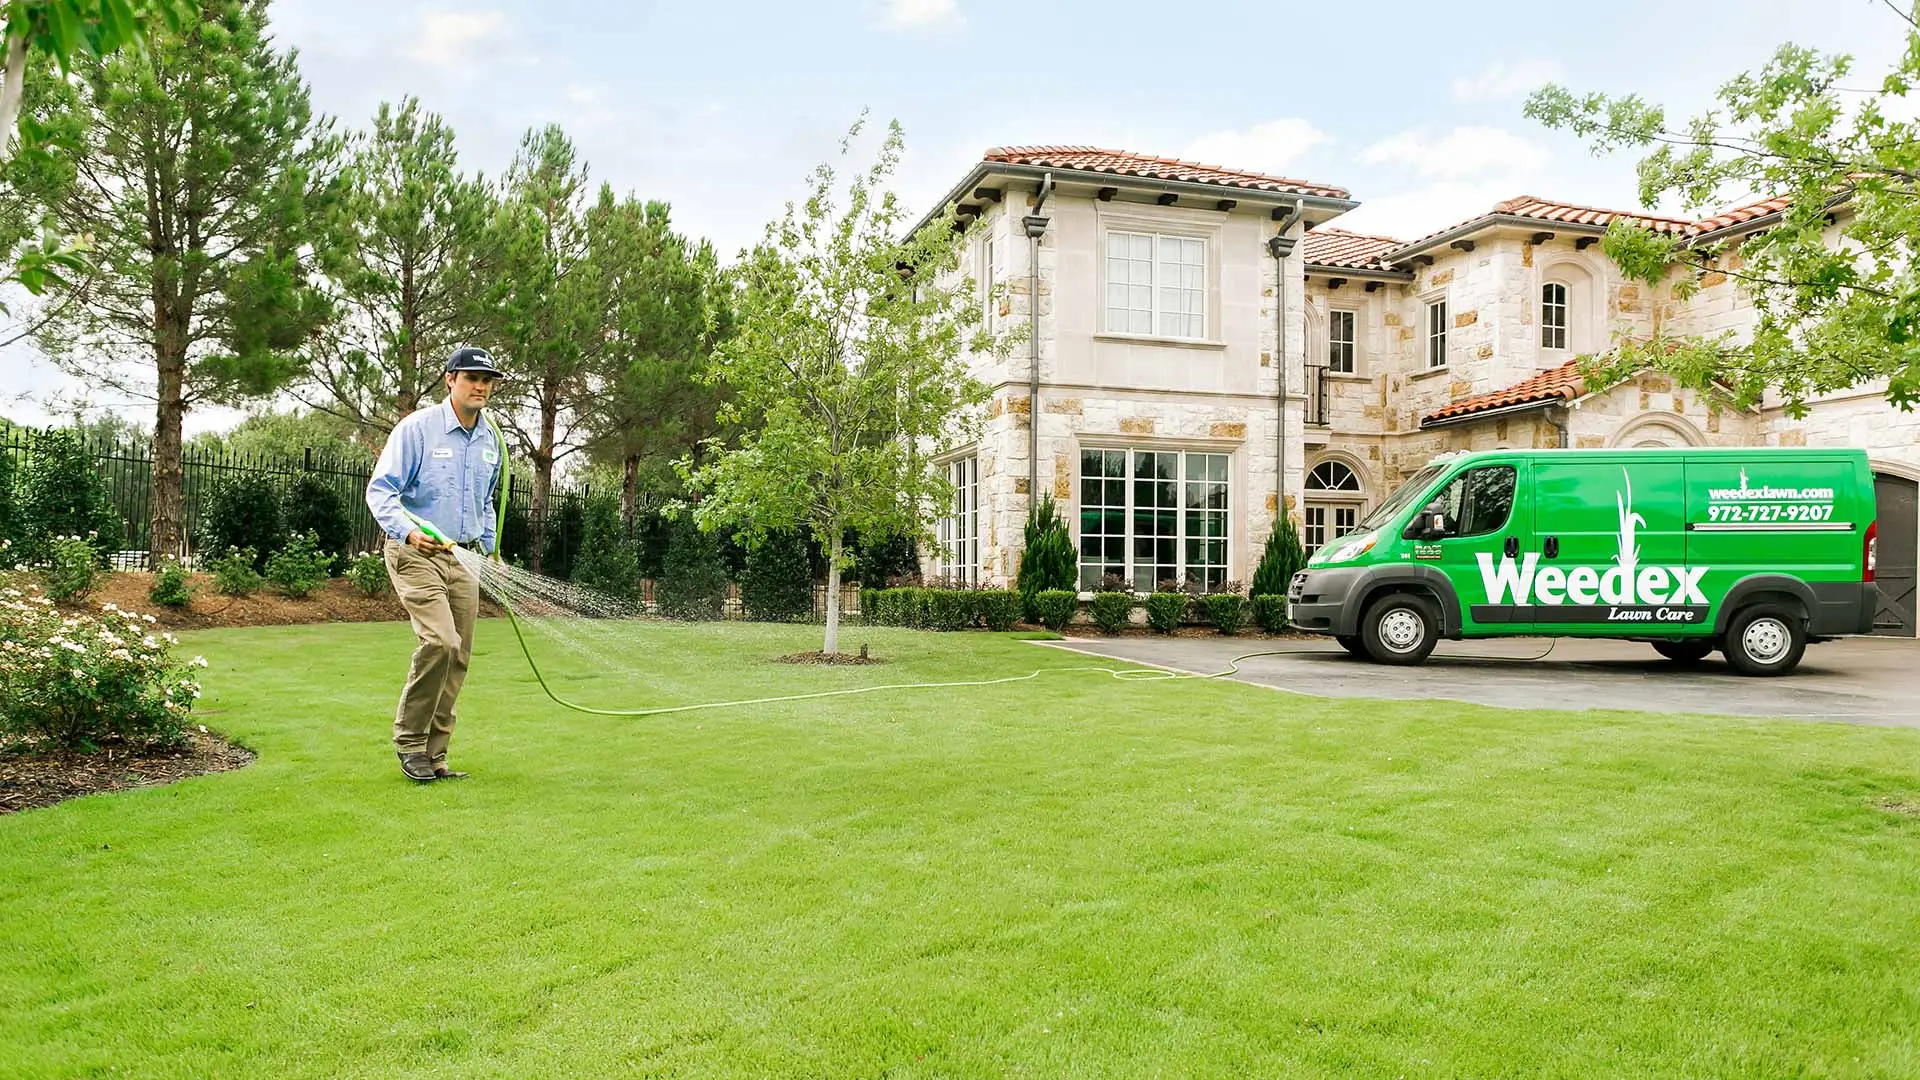 Weedex Lawn Care lawn expert treating lawn grass in Dallas, TX.